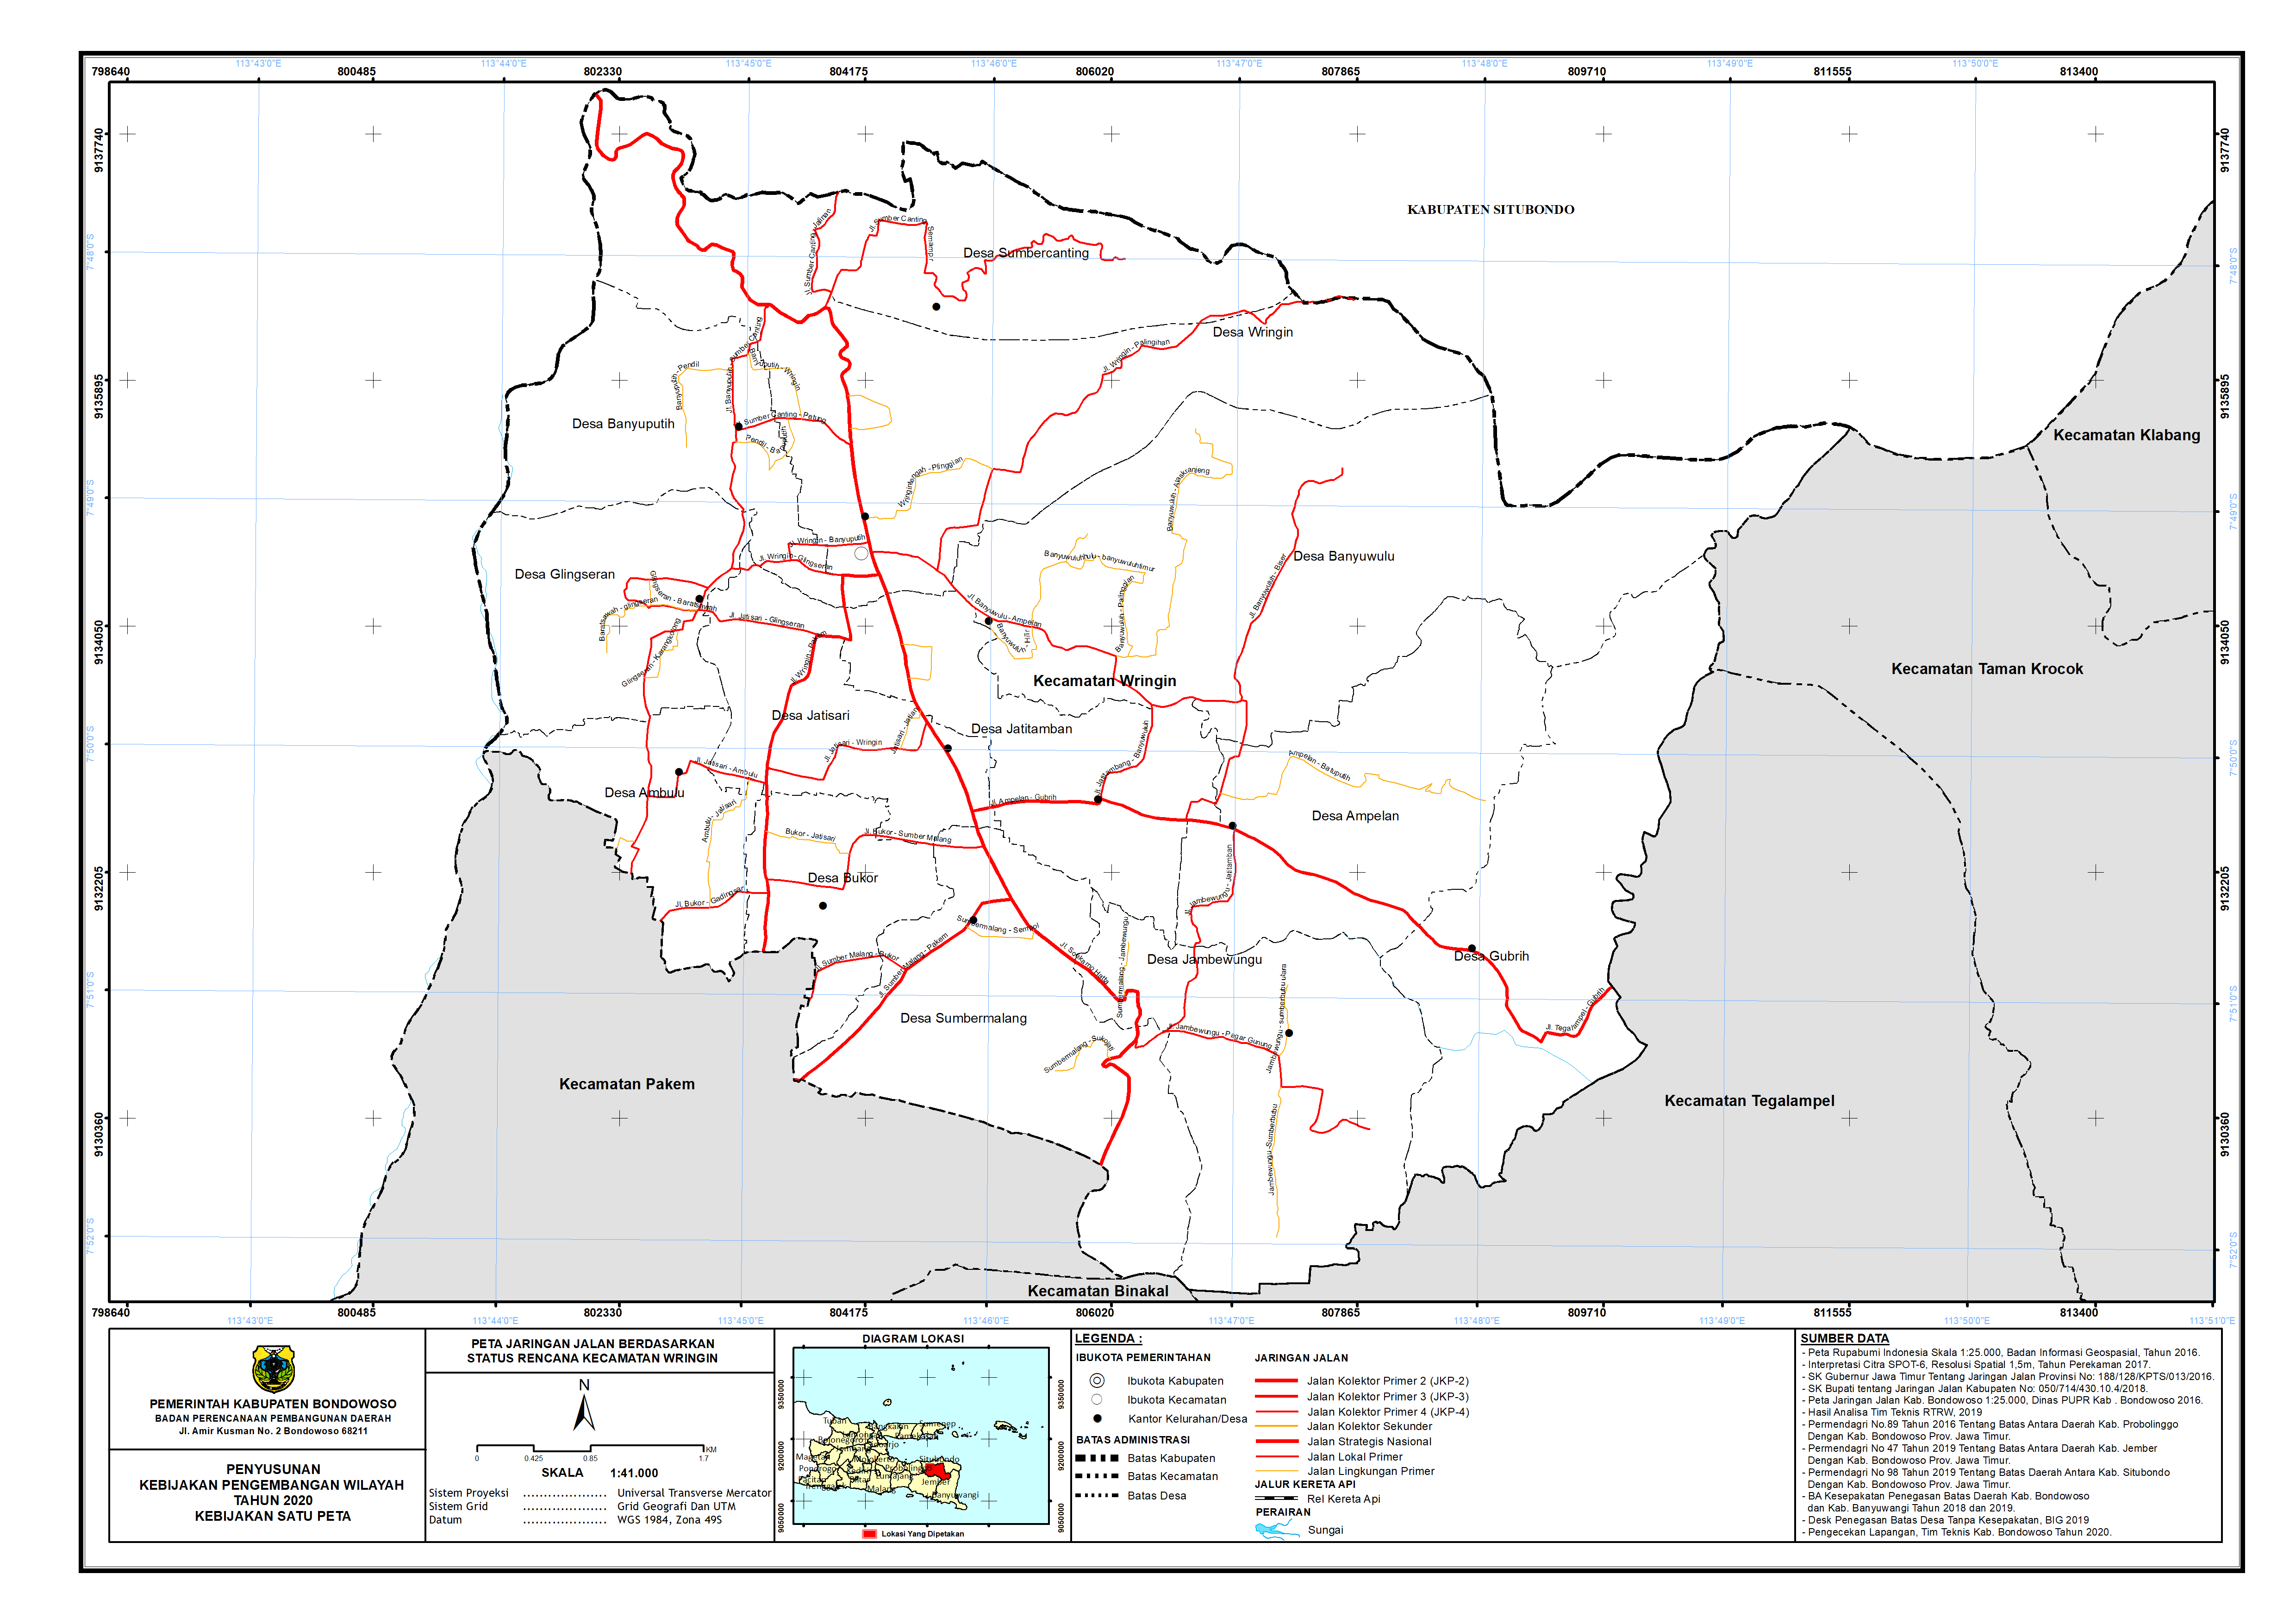 Peta Jaringan Jalan Berdasarkan Status Rencana Kecamatan Wringin.png